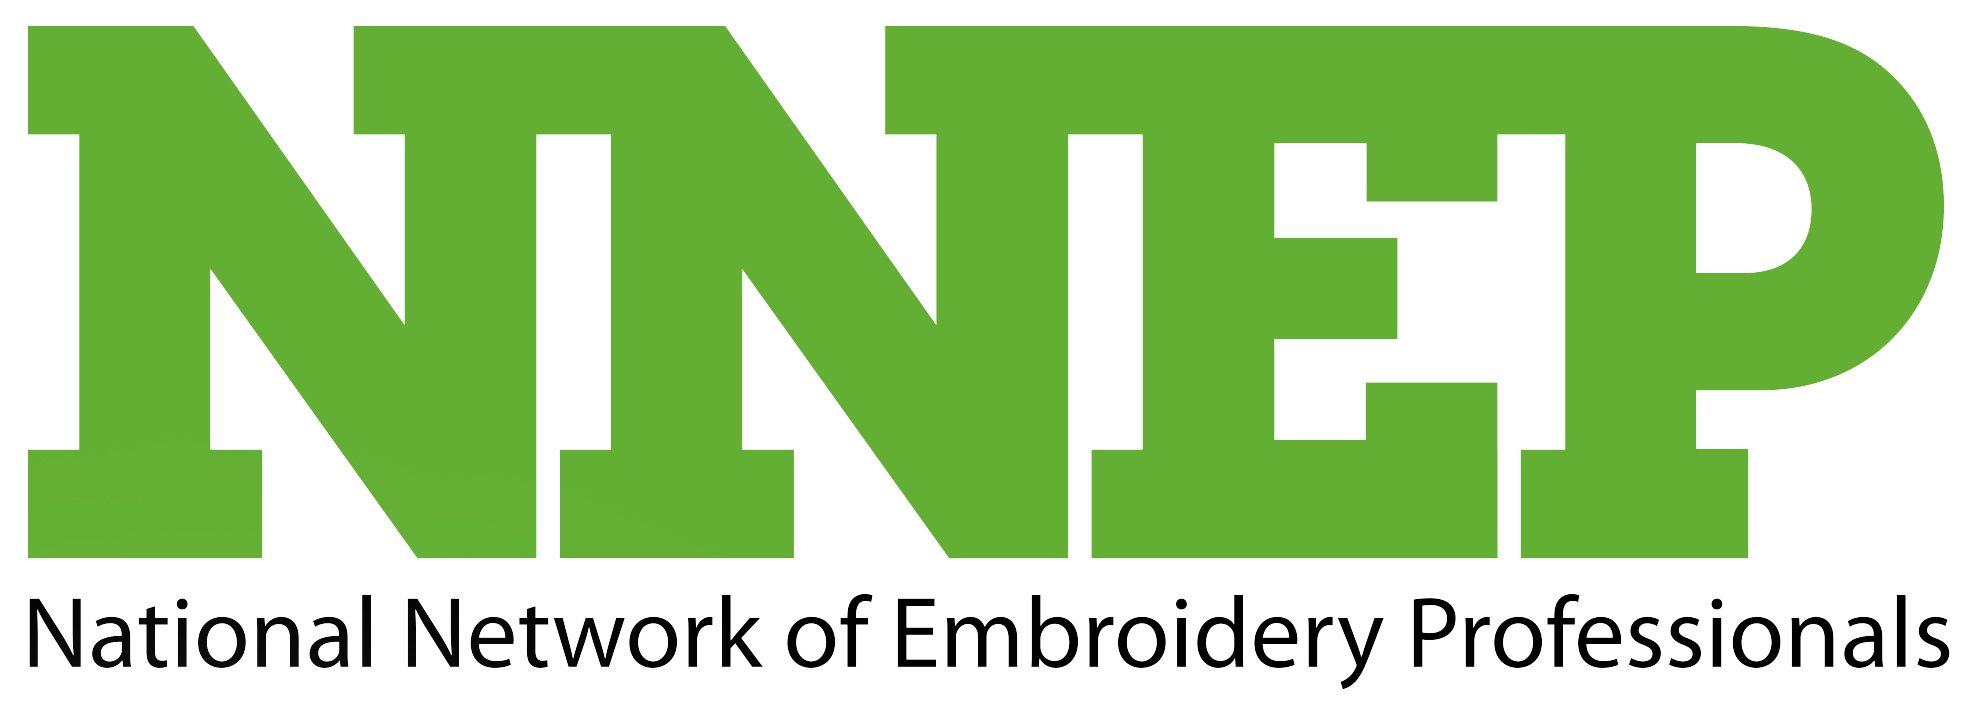 NNEP_logo_2019